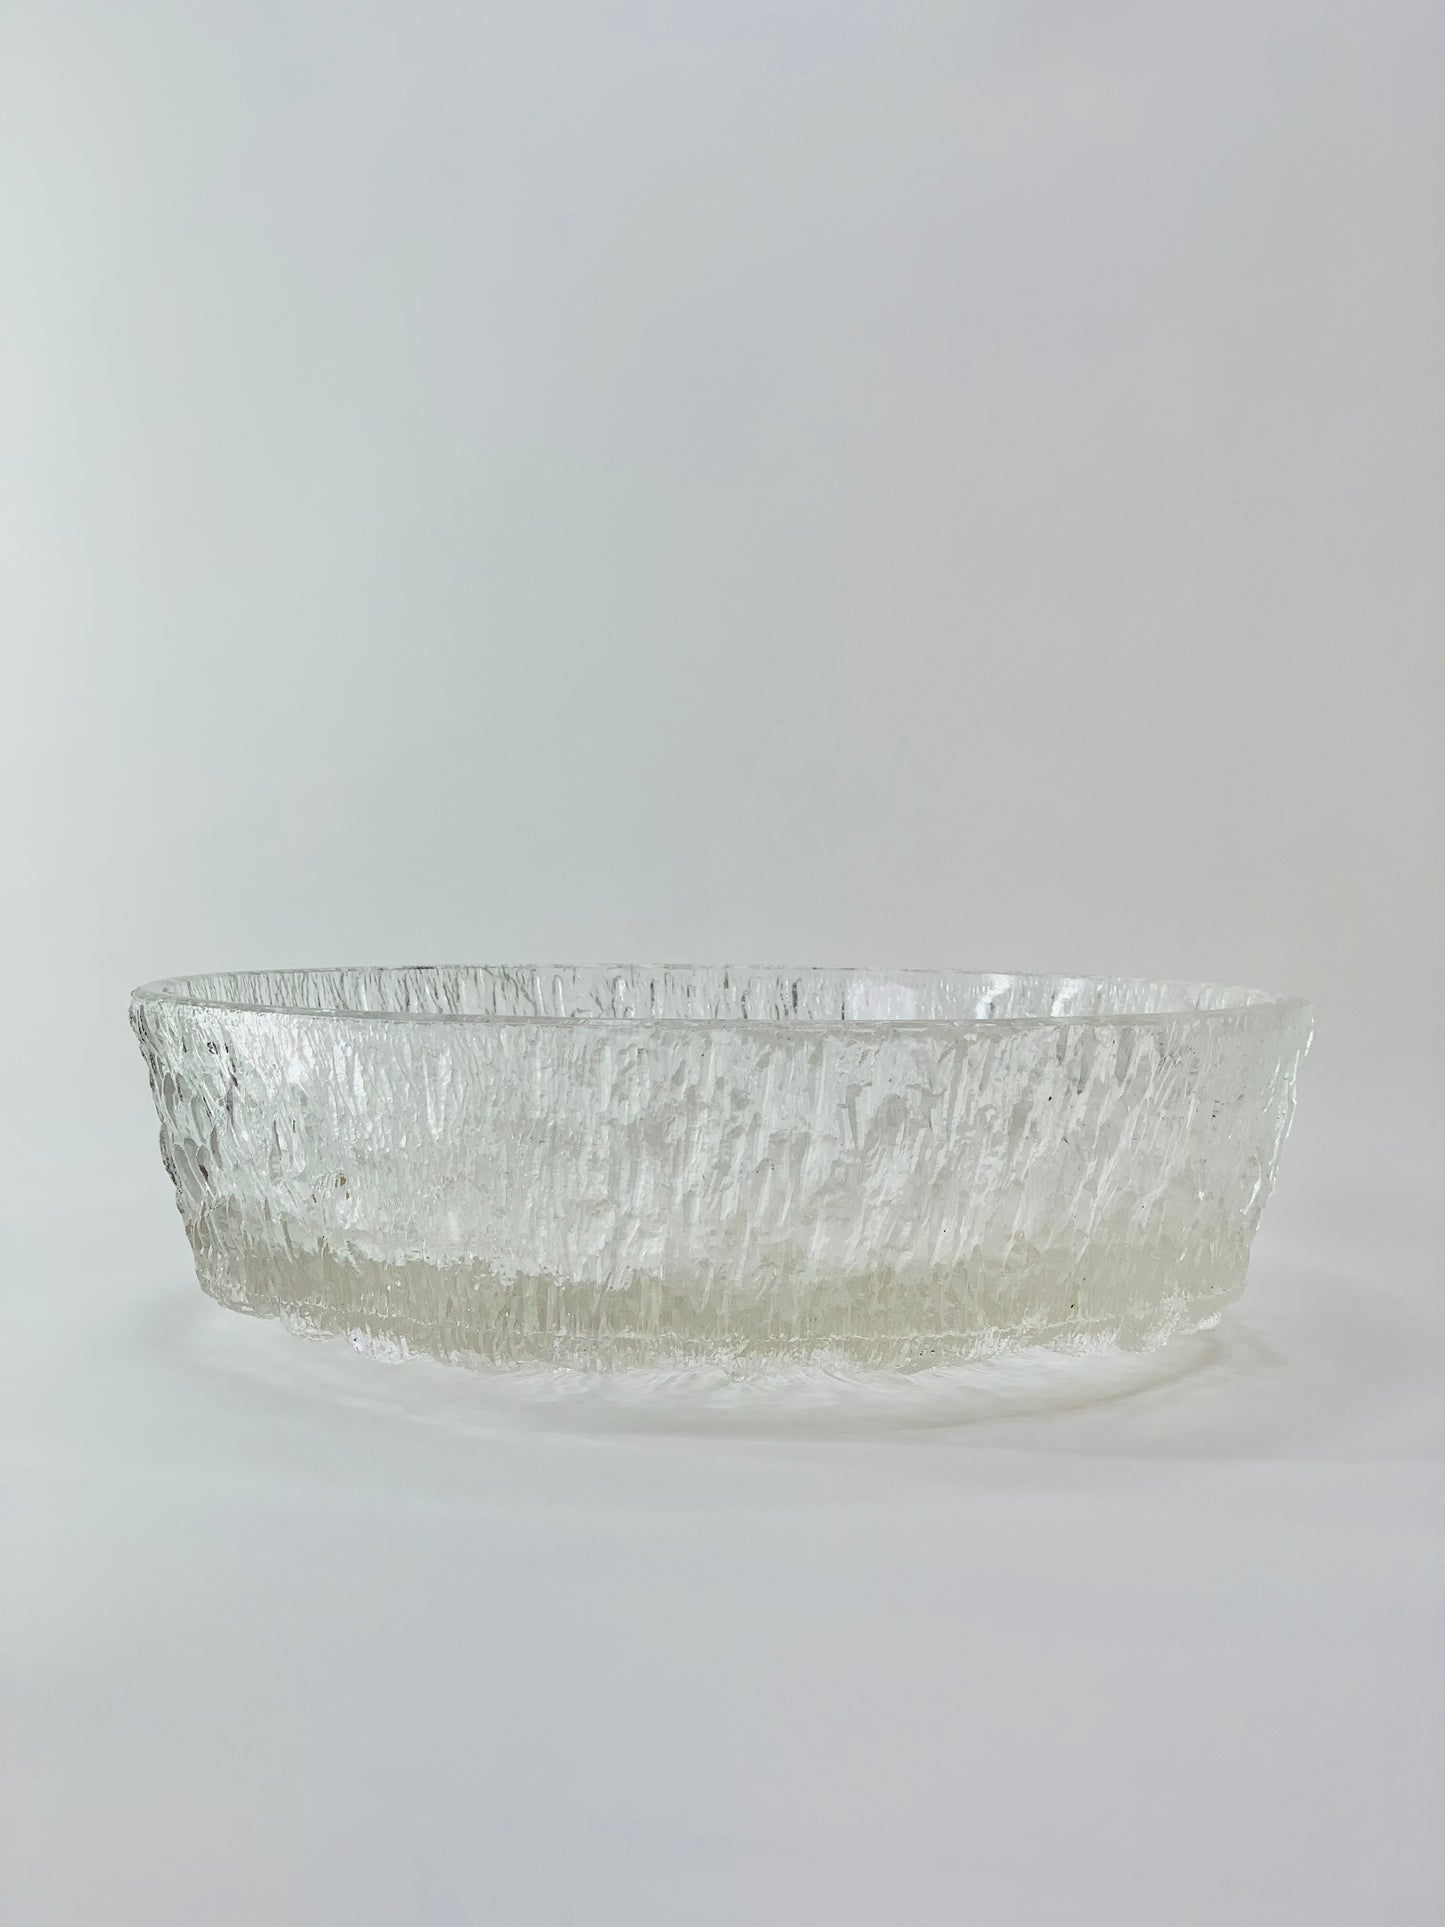 Rare large MCM clear bark glass salad/fruit bowl